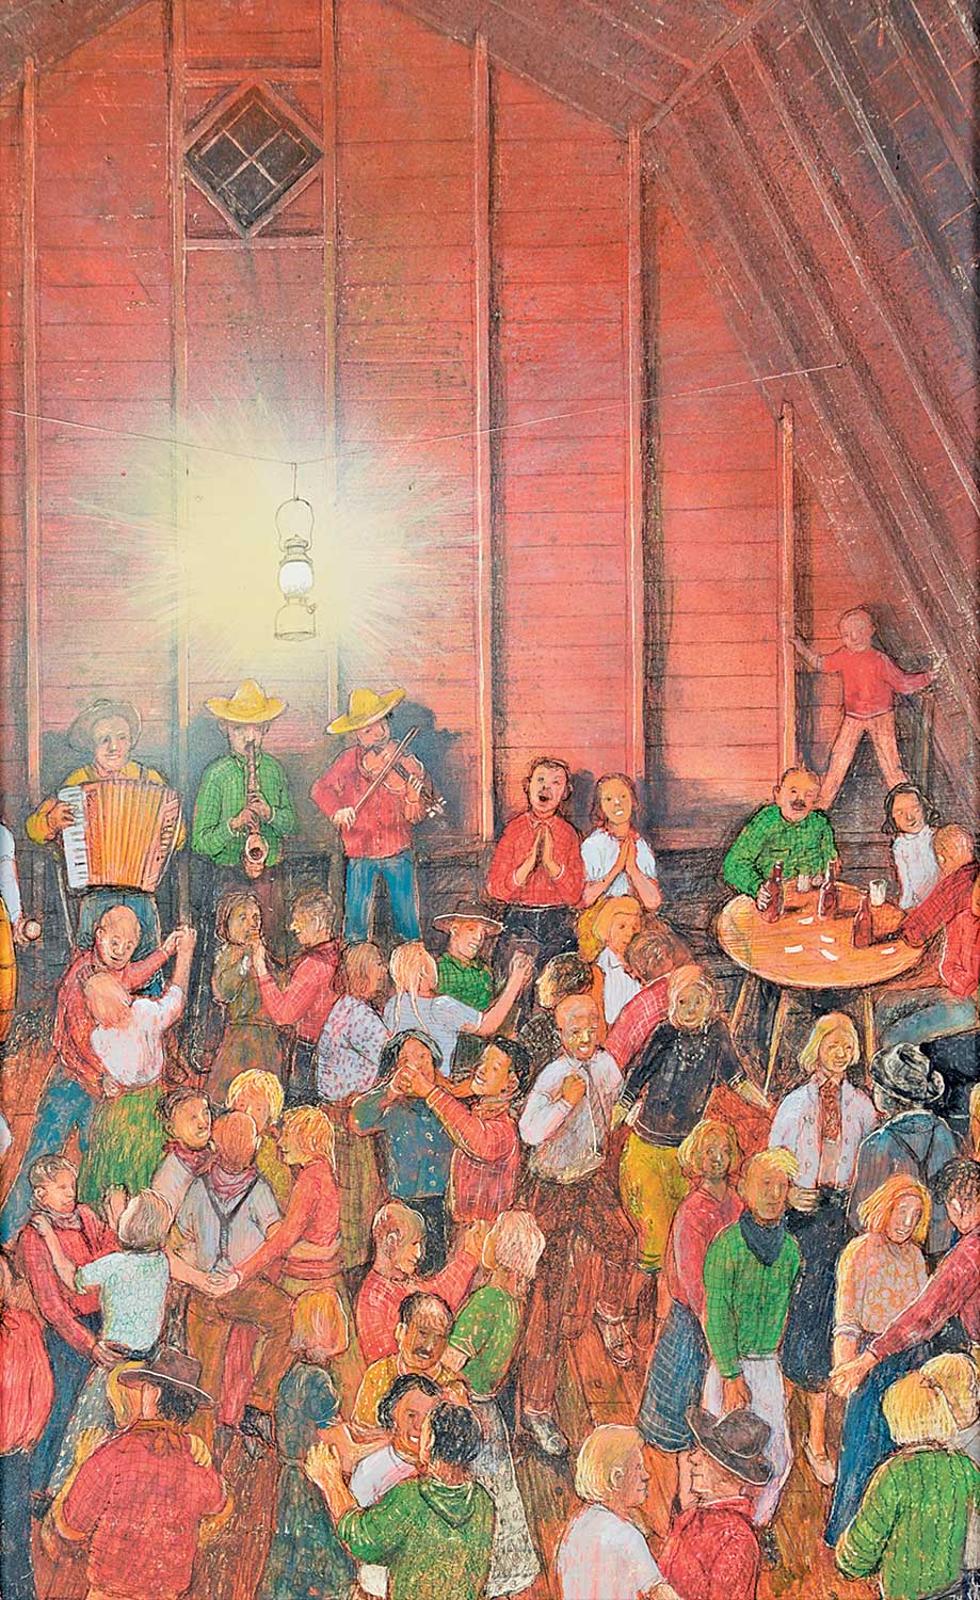 William Kurelek (1927-1977) - The Barn Dance [The Happy Canadian]